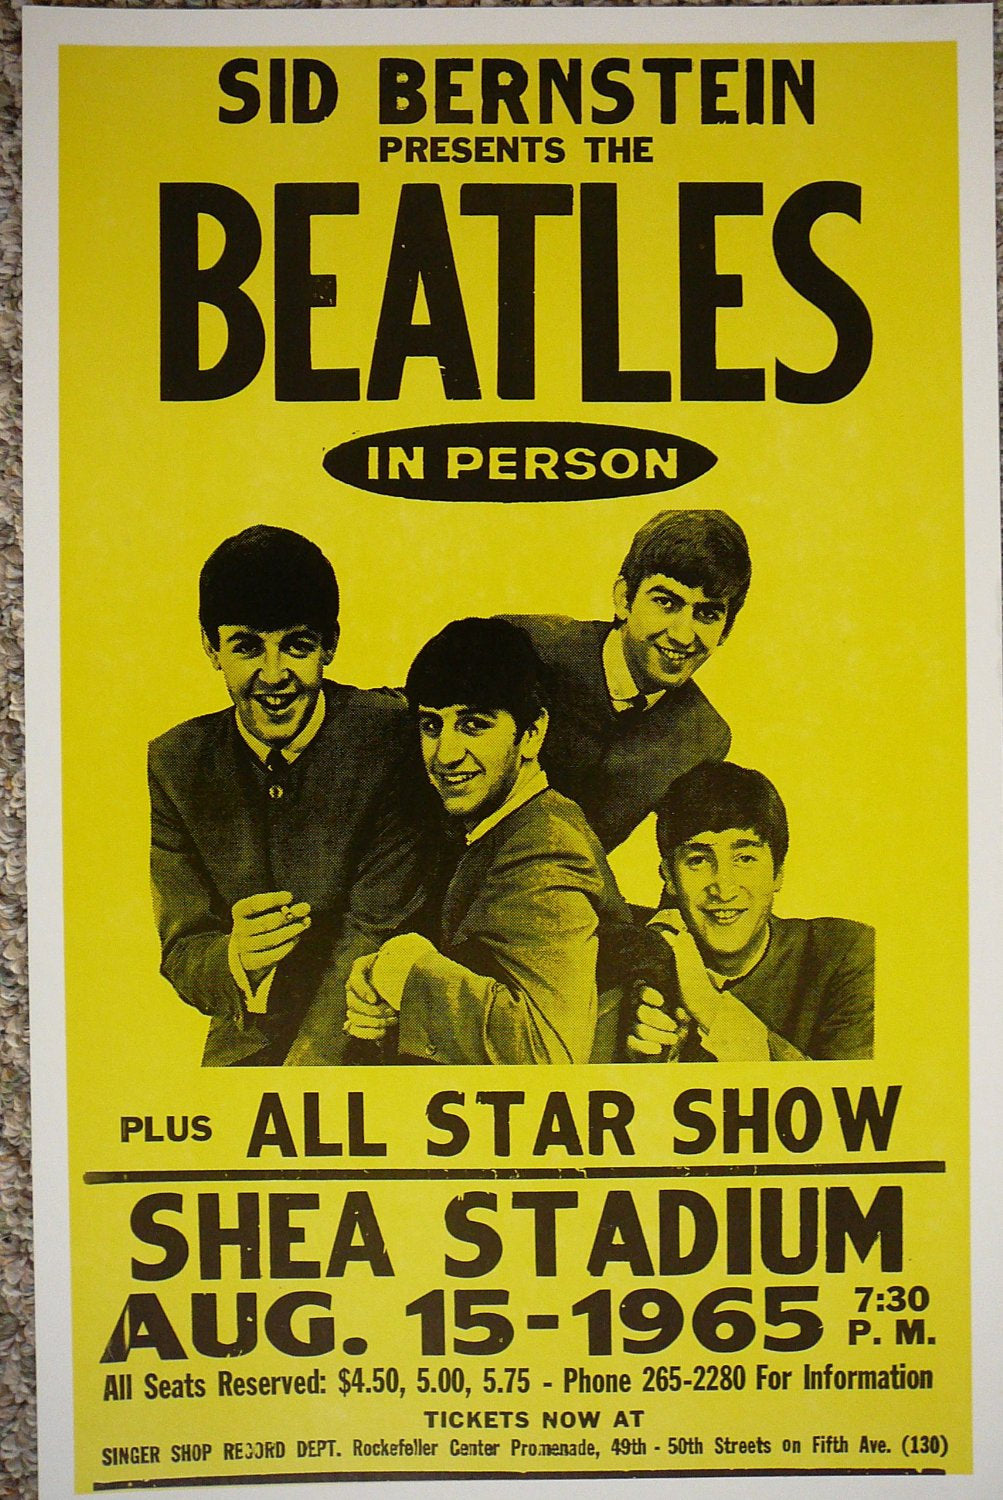 Vintage Music Art Poster The Beatles Shea Stadium 1965 - 0255